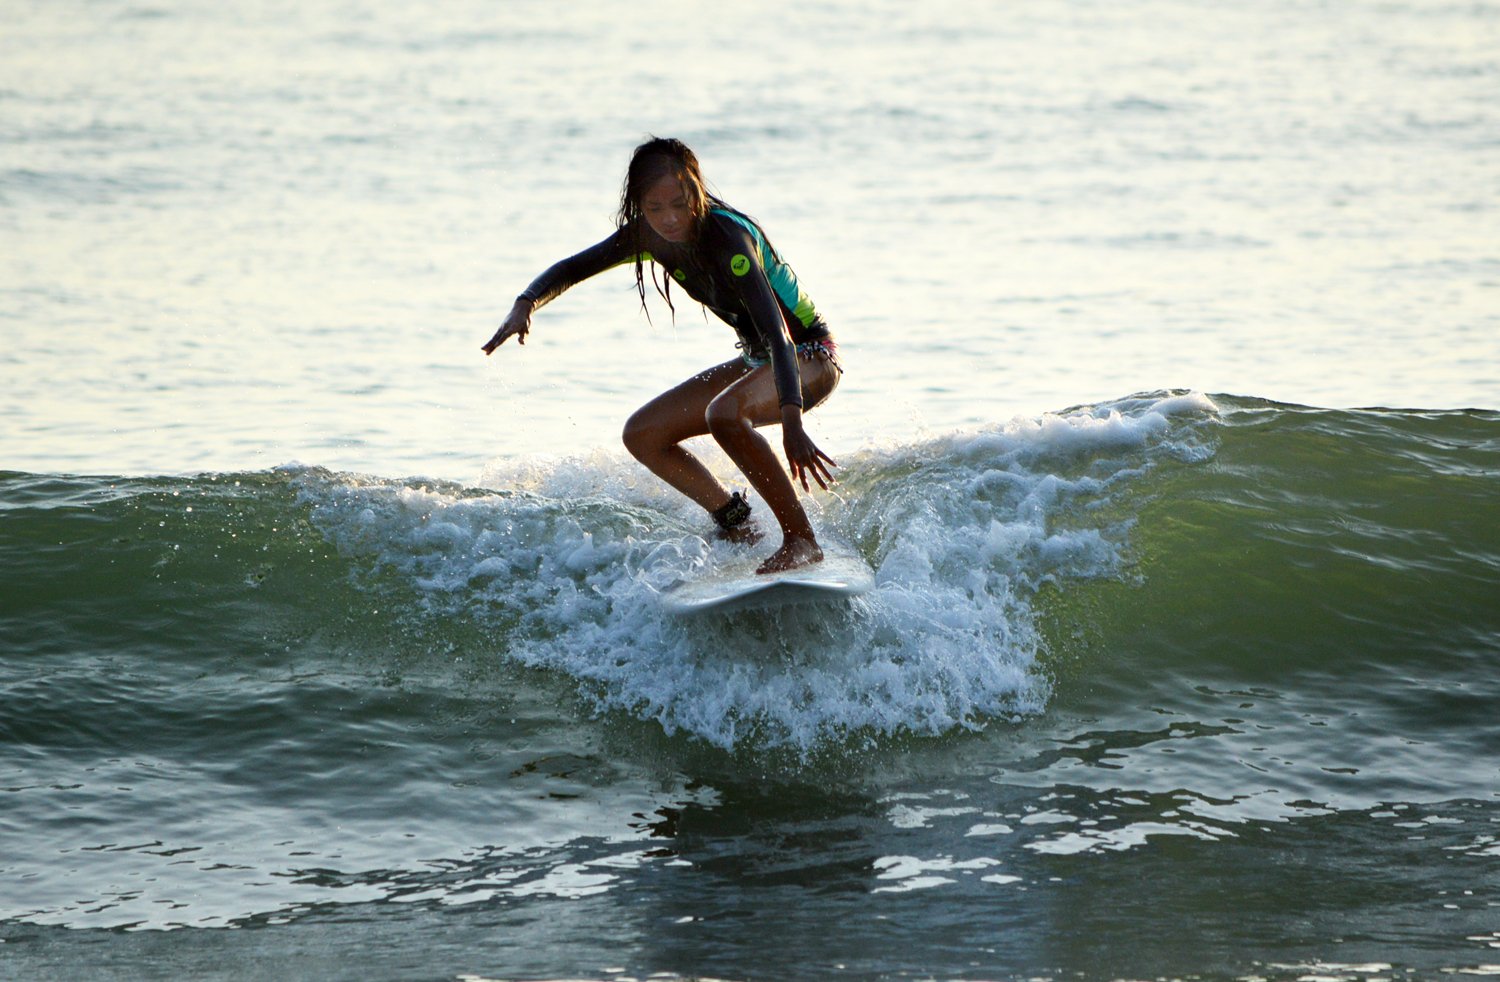 costa-rica-surf-2 - Copy.JPG